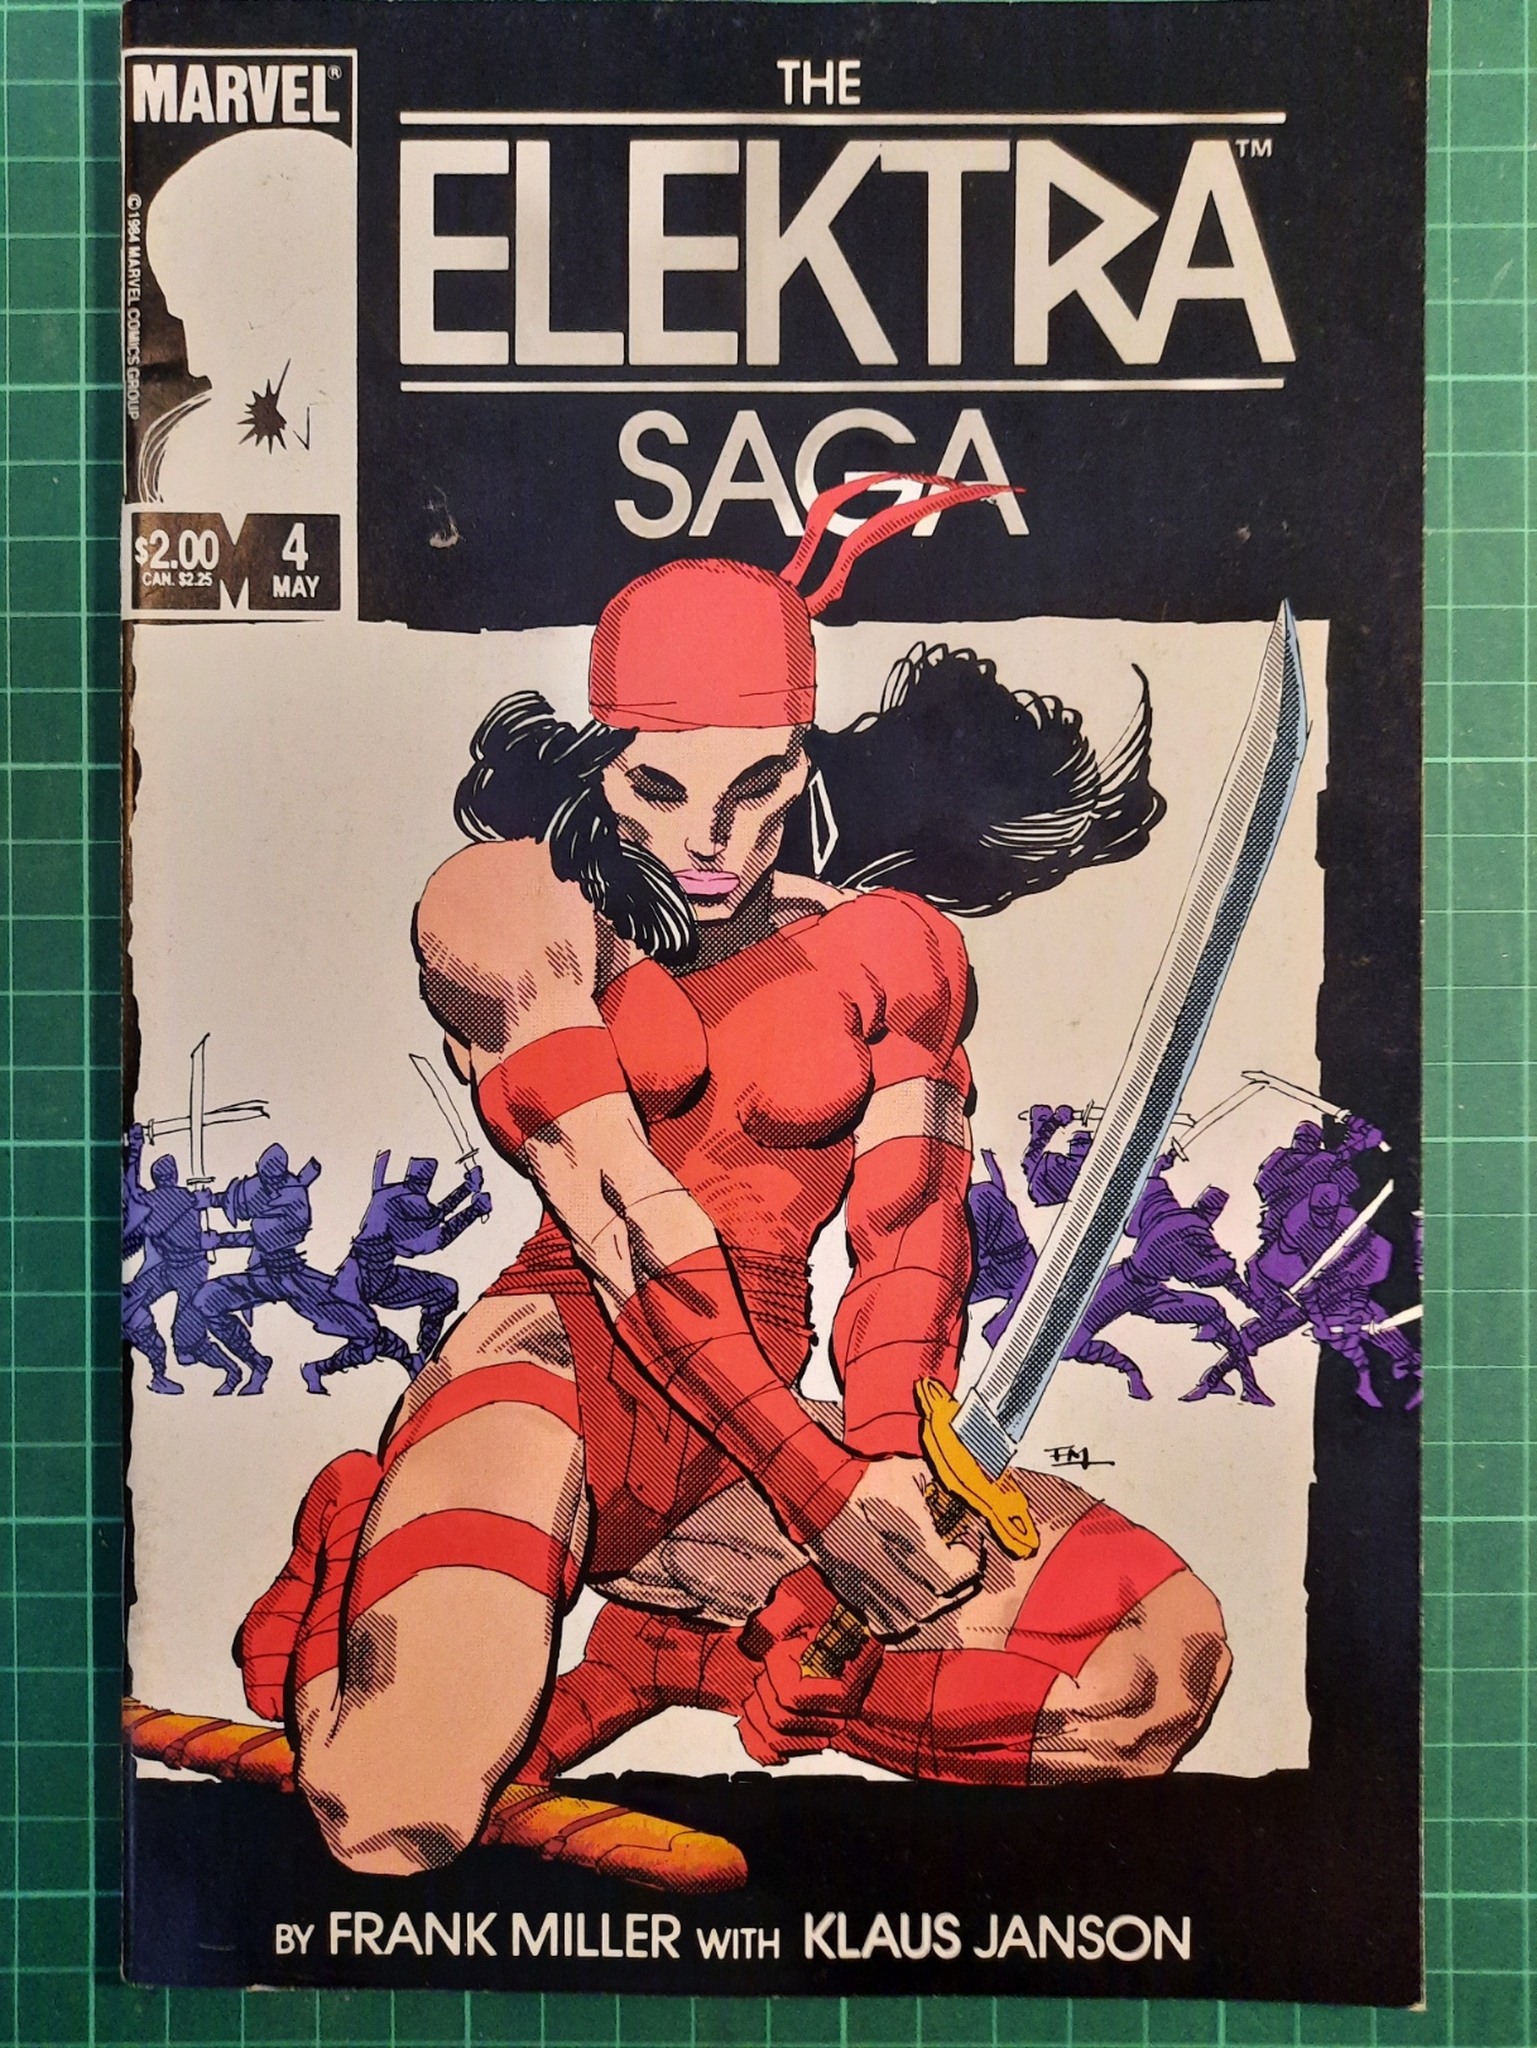 The Elektra saga #4